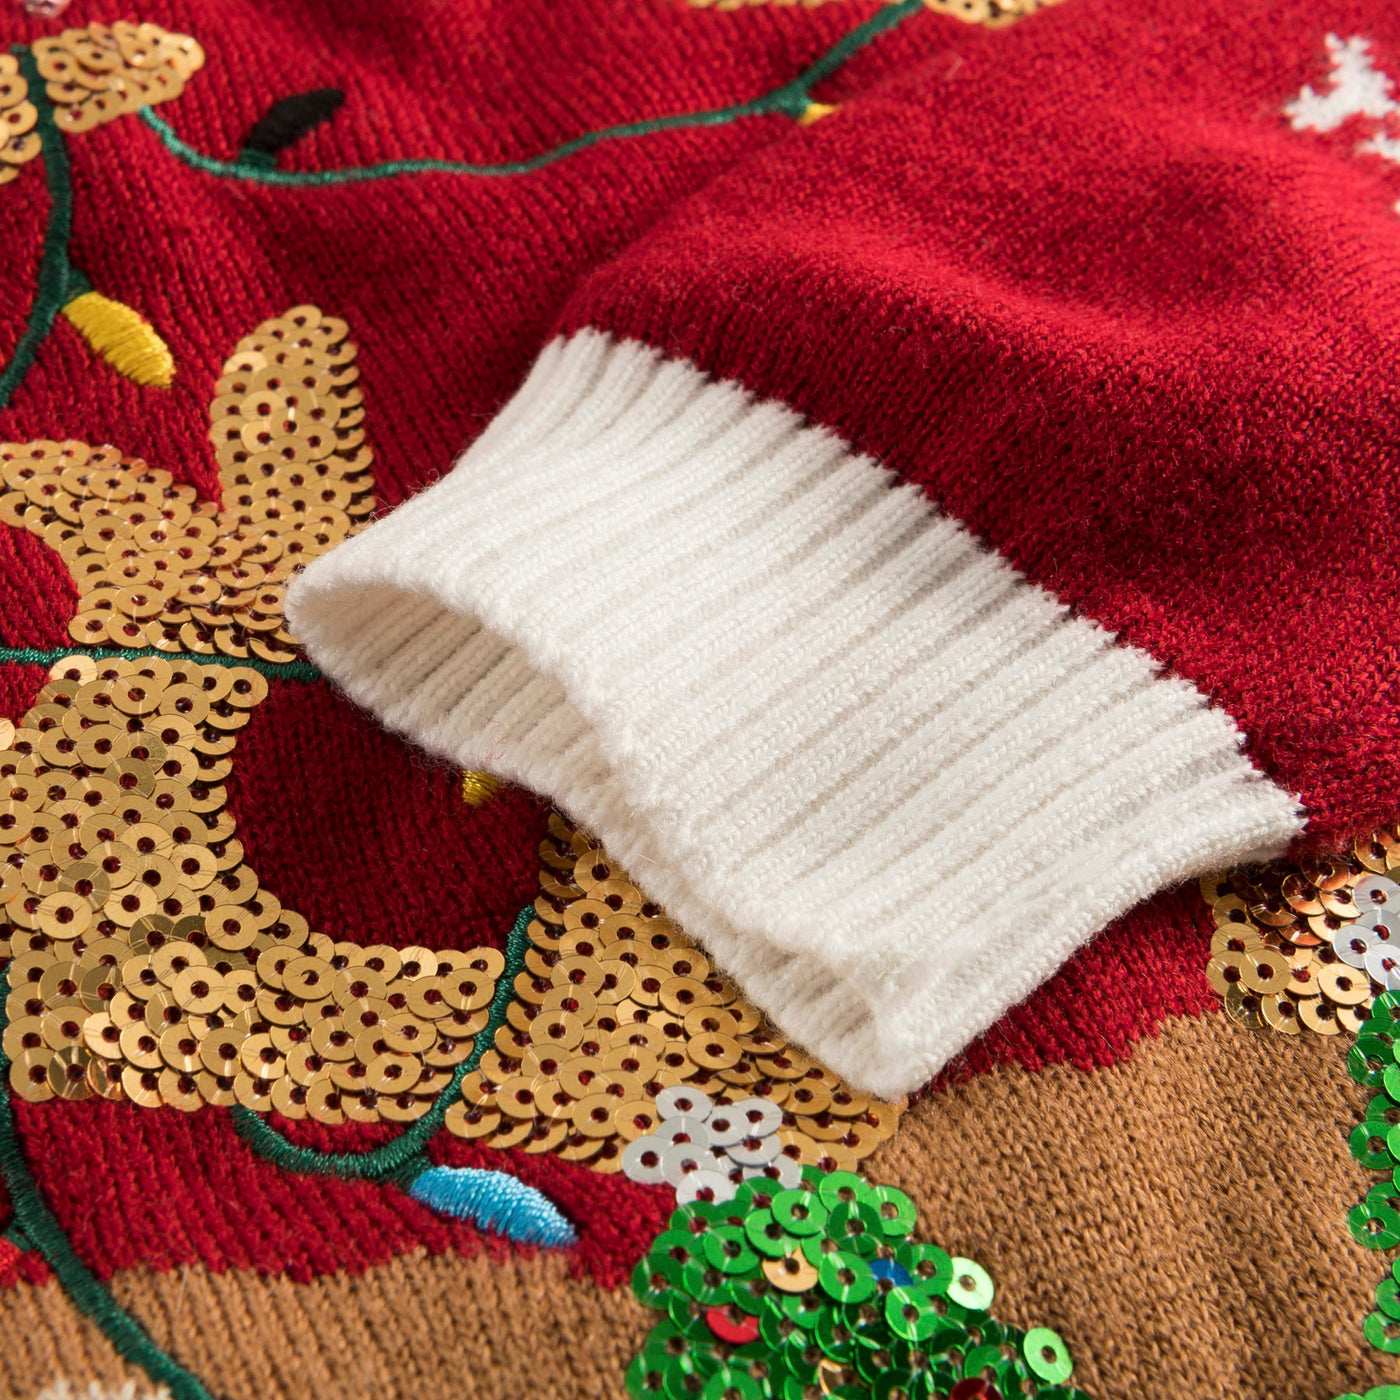 Kids' Rudolf Christmas Sweater